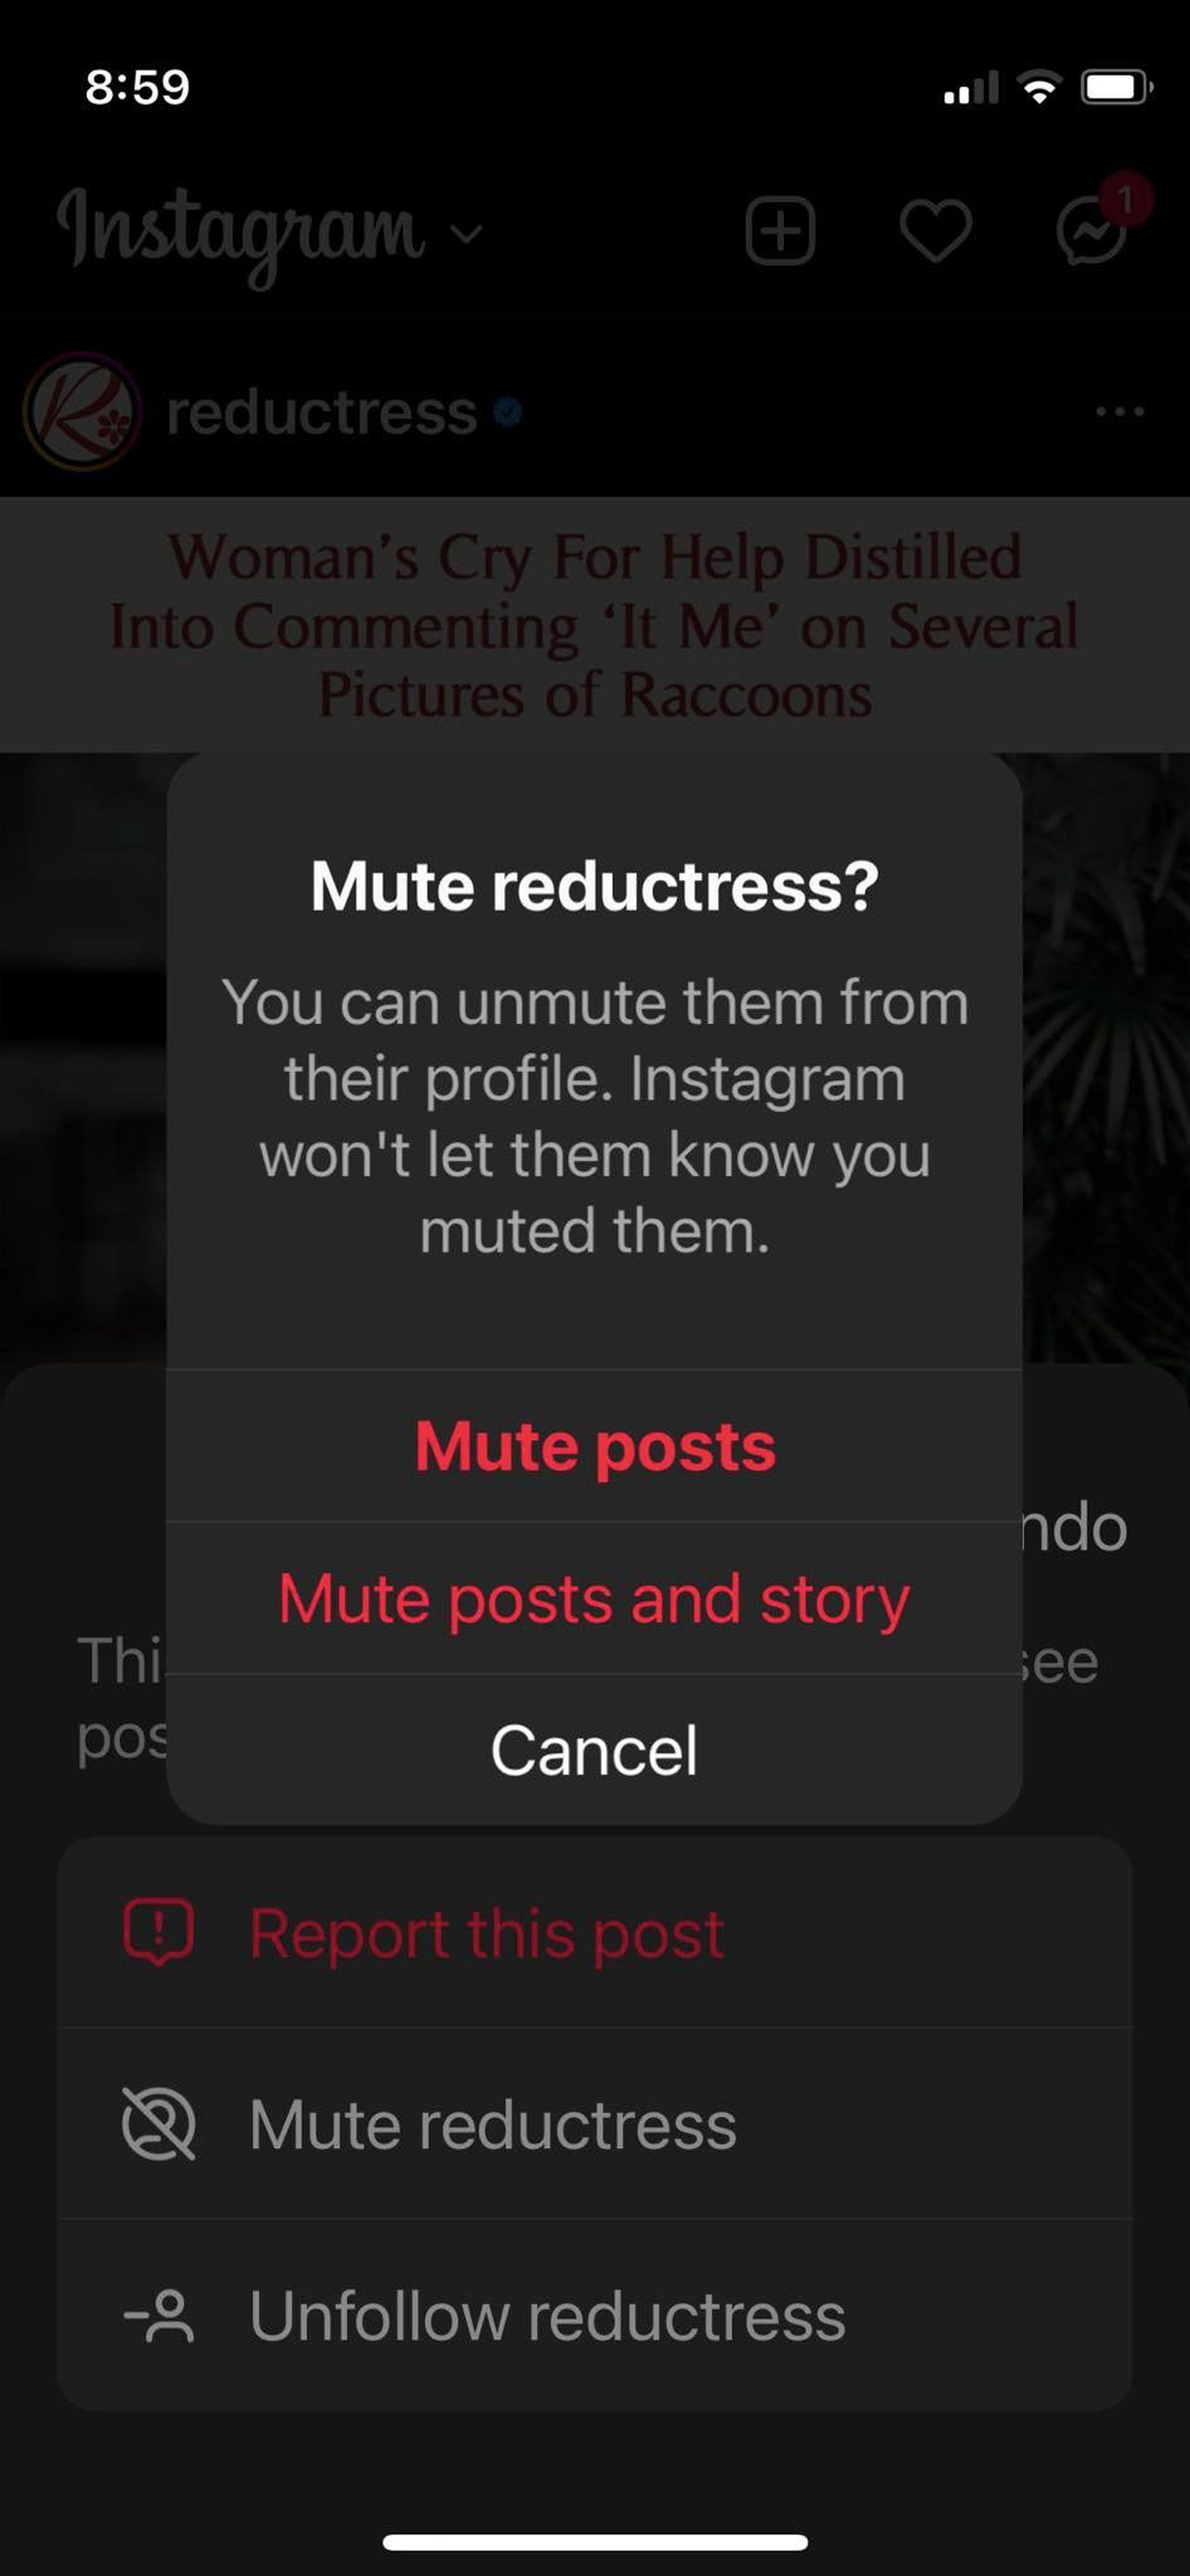 Pop-up menu to mute posts or posts plus stories.